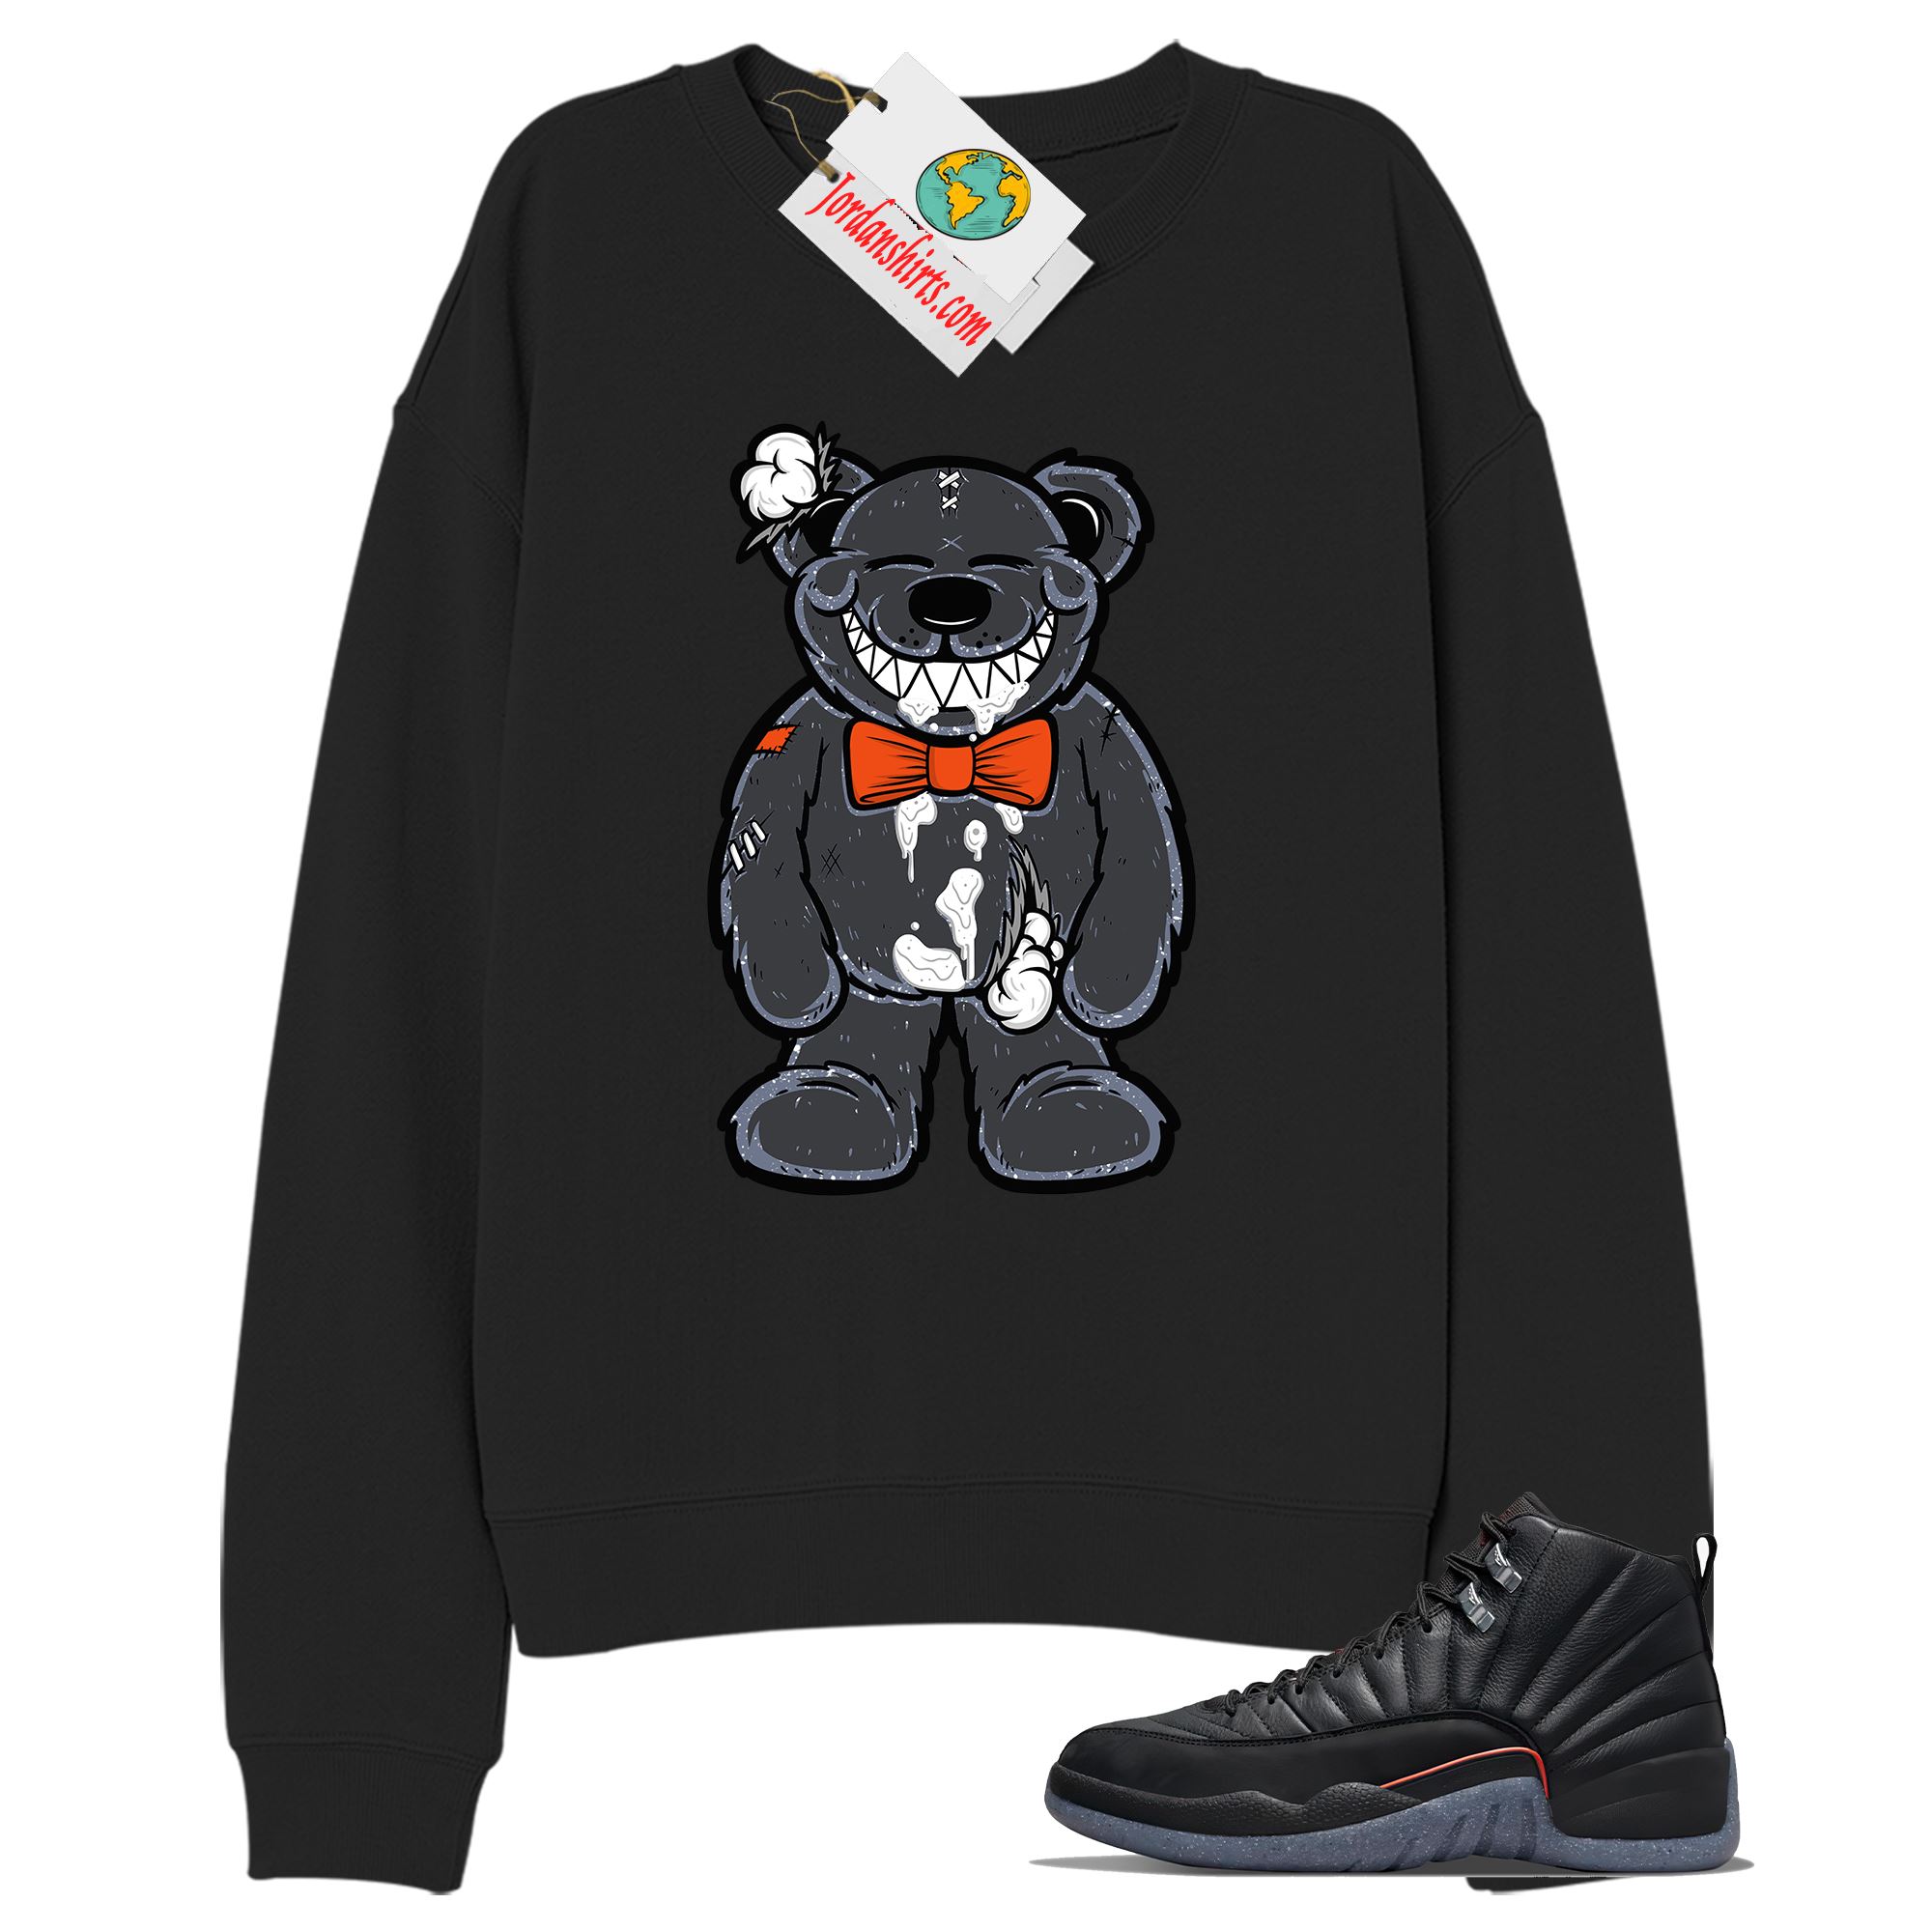 Jordan 12 Sweatshirt, Teddy Bear Smile Black Sweatshirt Air Jordan 12 Utility Grind 12s Size Up To 5xl